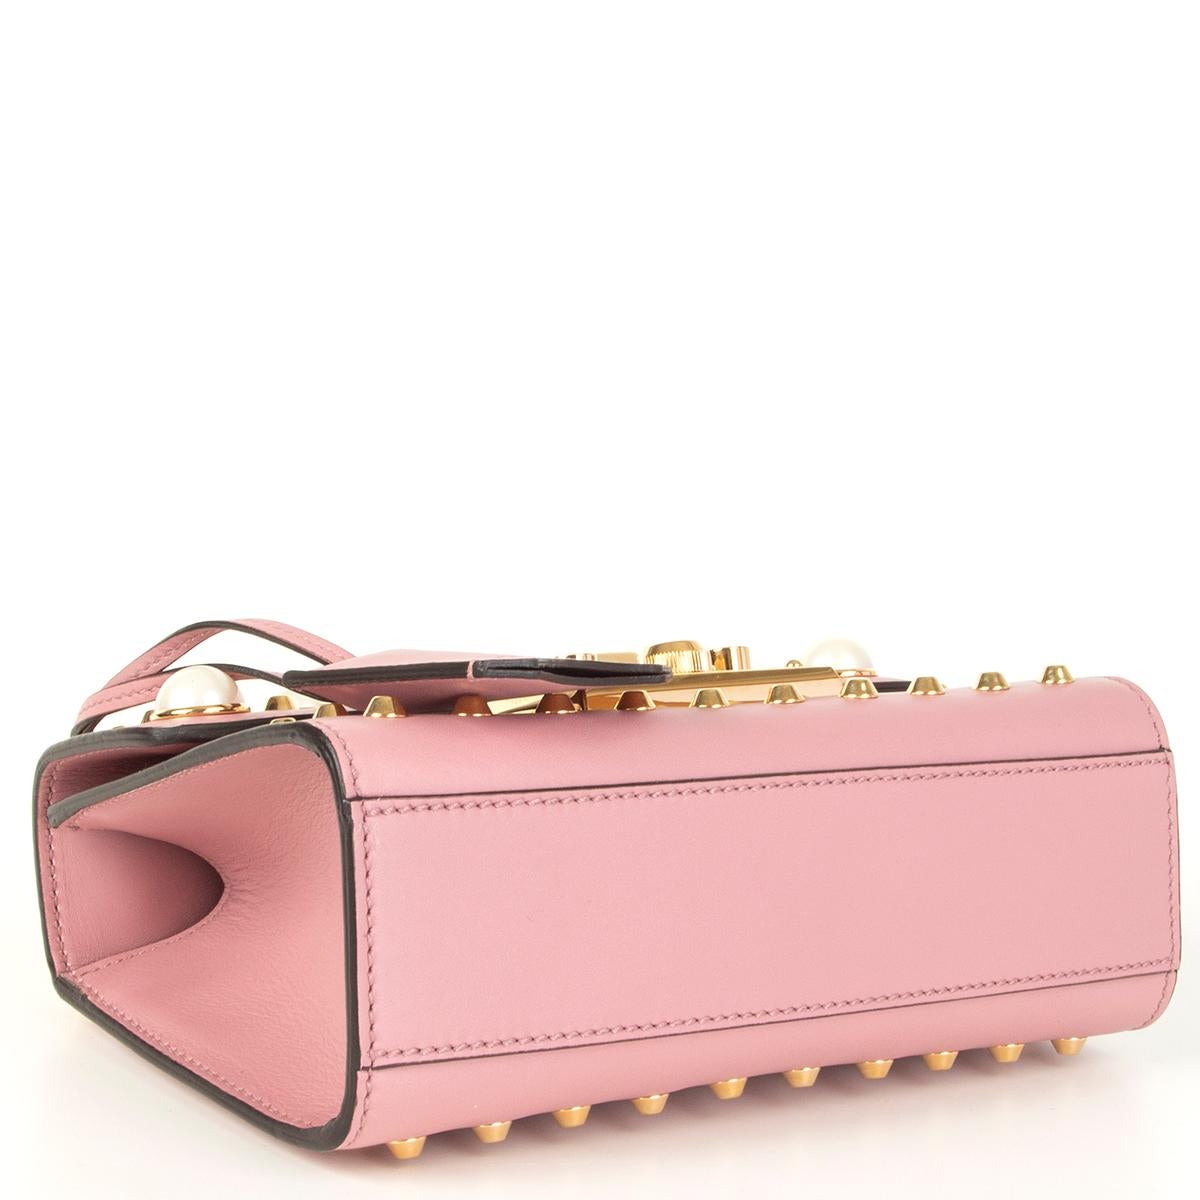 padlock purse